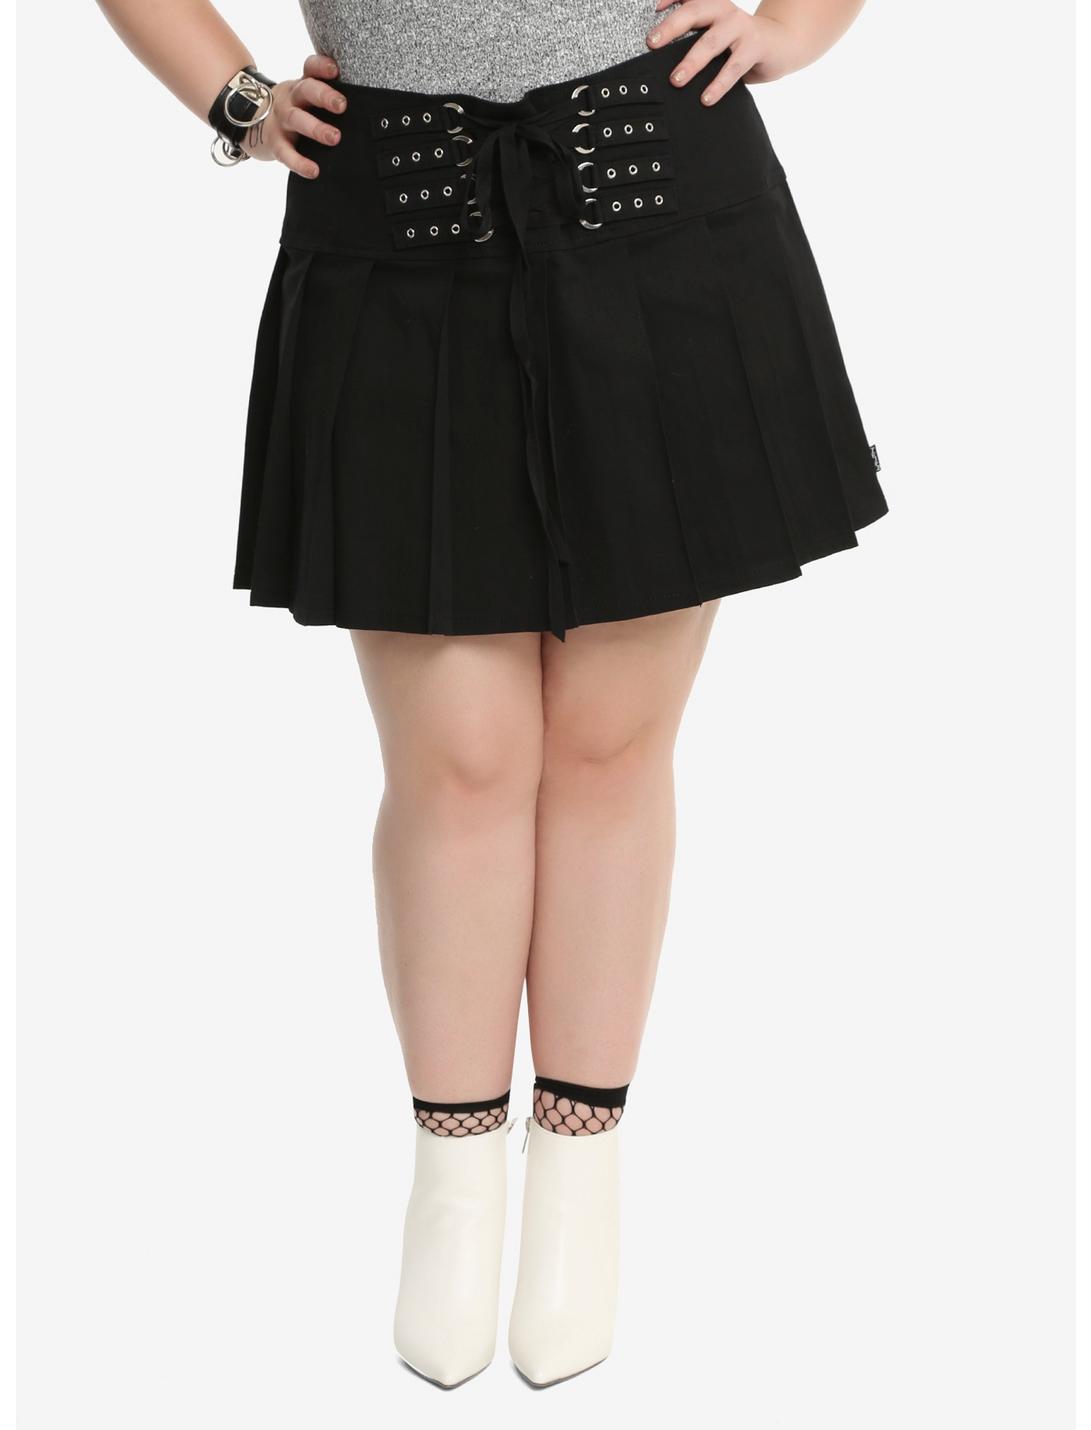 Royal Bones By Tripp Black Lace-Up Pleated Skirt Plus Size, BLACK, hi-res